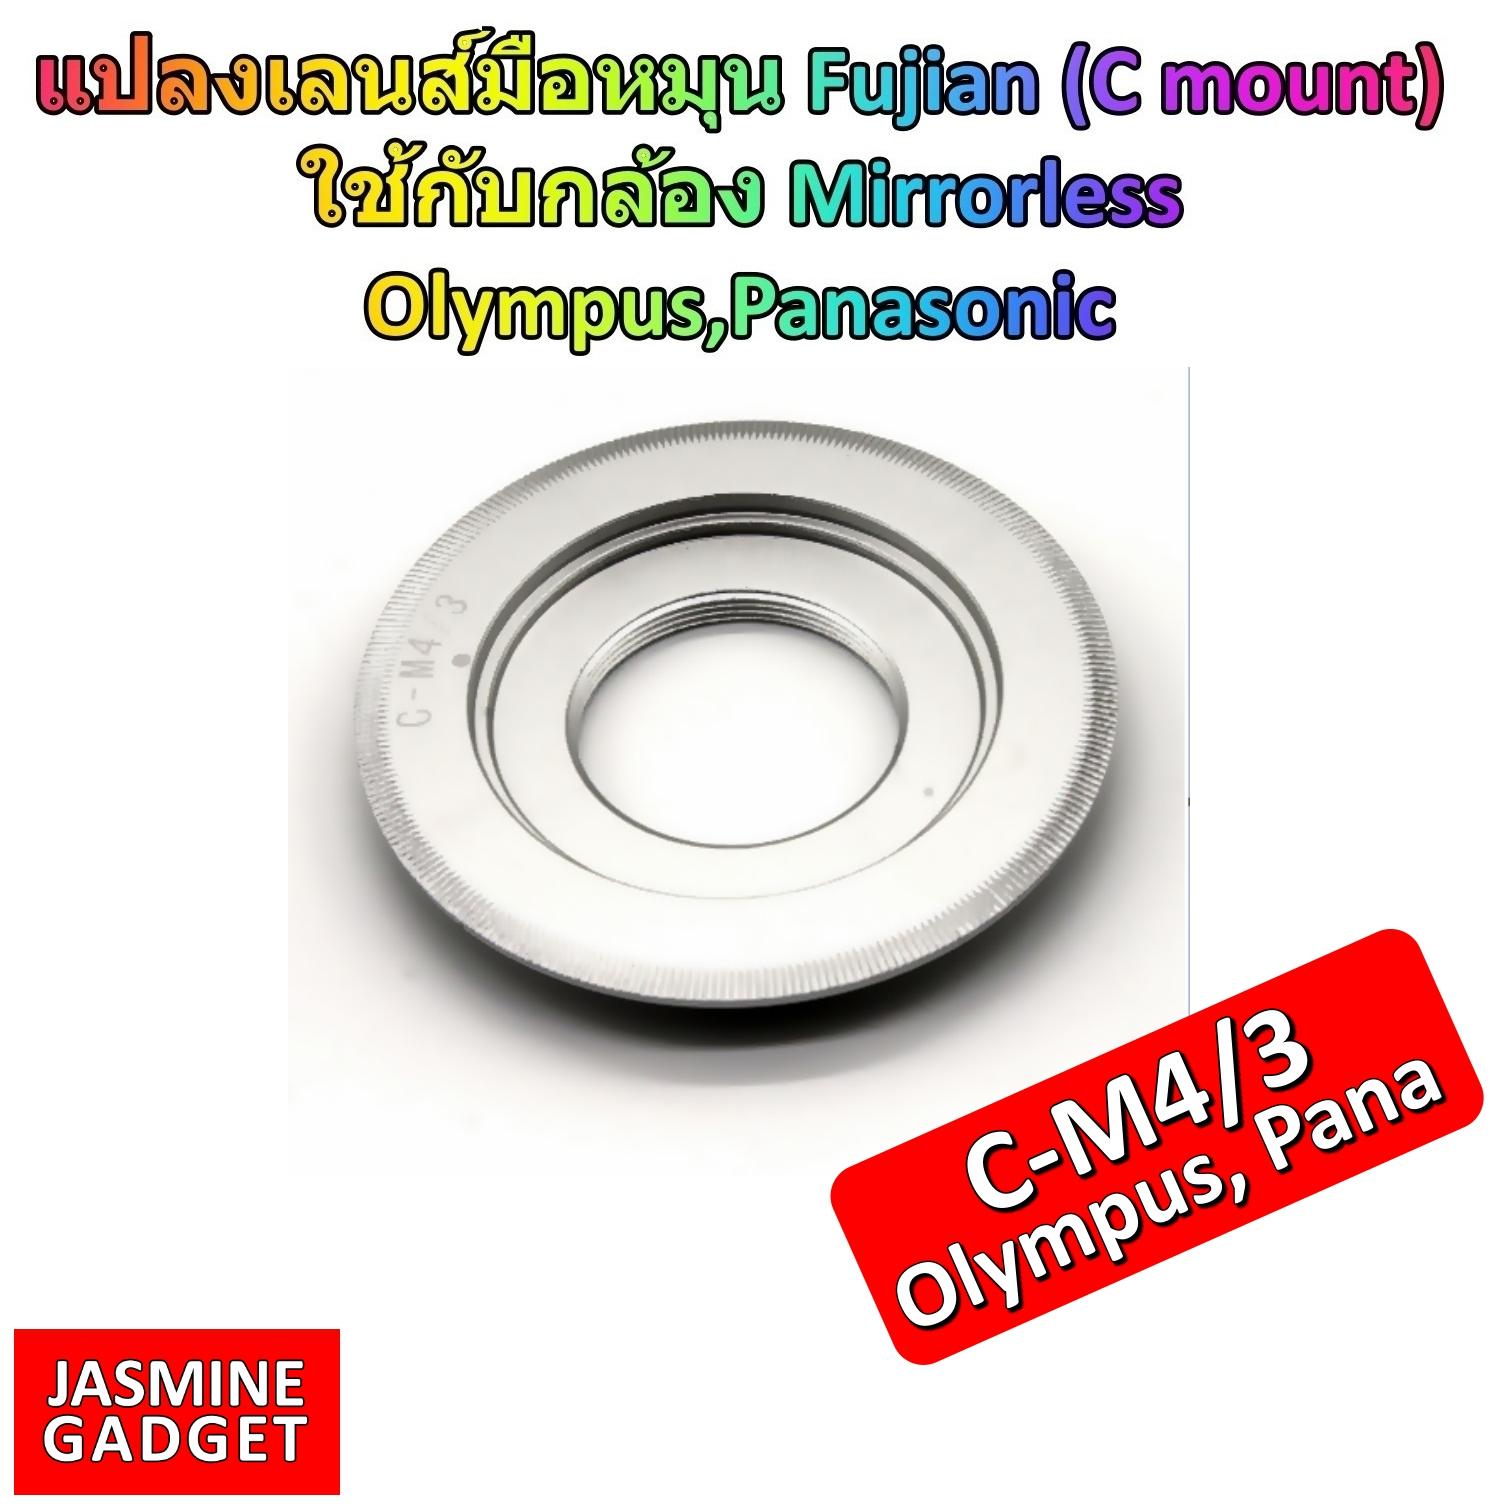  Olympus Adaptor C-M4/3 for แปลงเลนส์ C-Mount เช่น Fujian, Wesley เพื่อใช้งานกับกล้องค่าย Mirrorless Olympus, Panasonic , Xiaomi ได้ทุกรุ่น